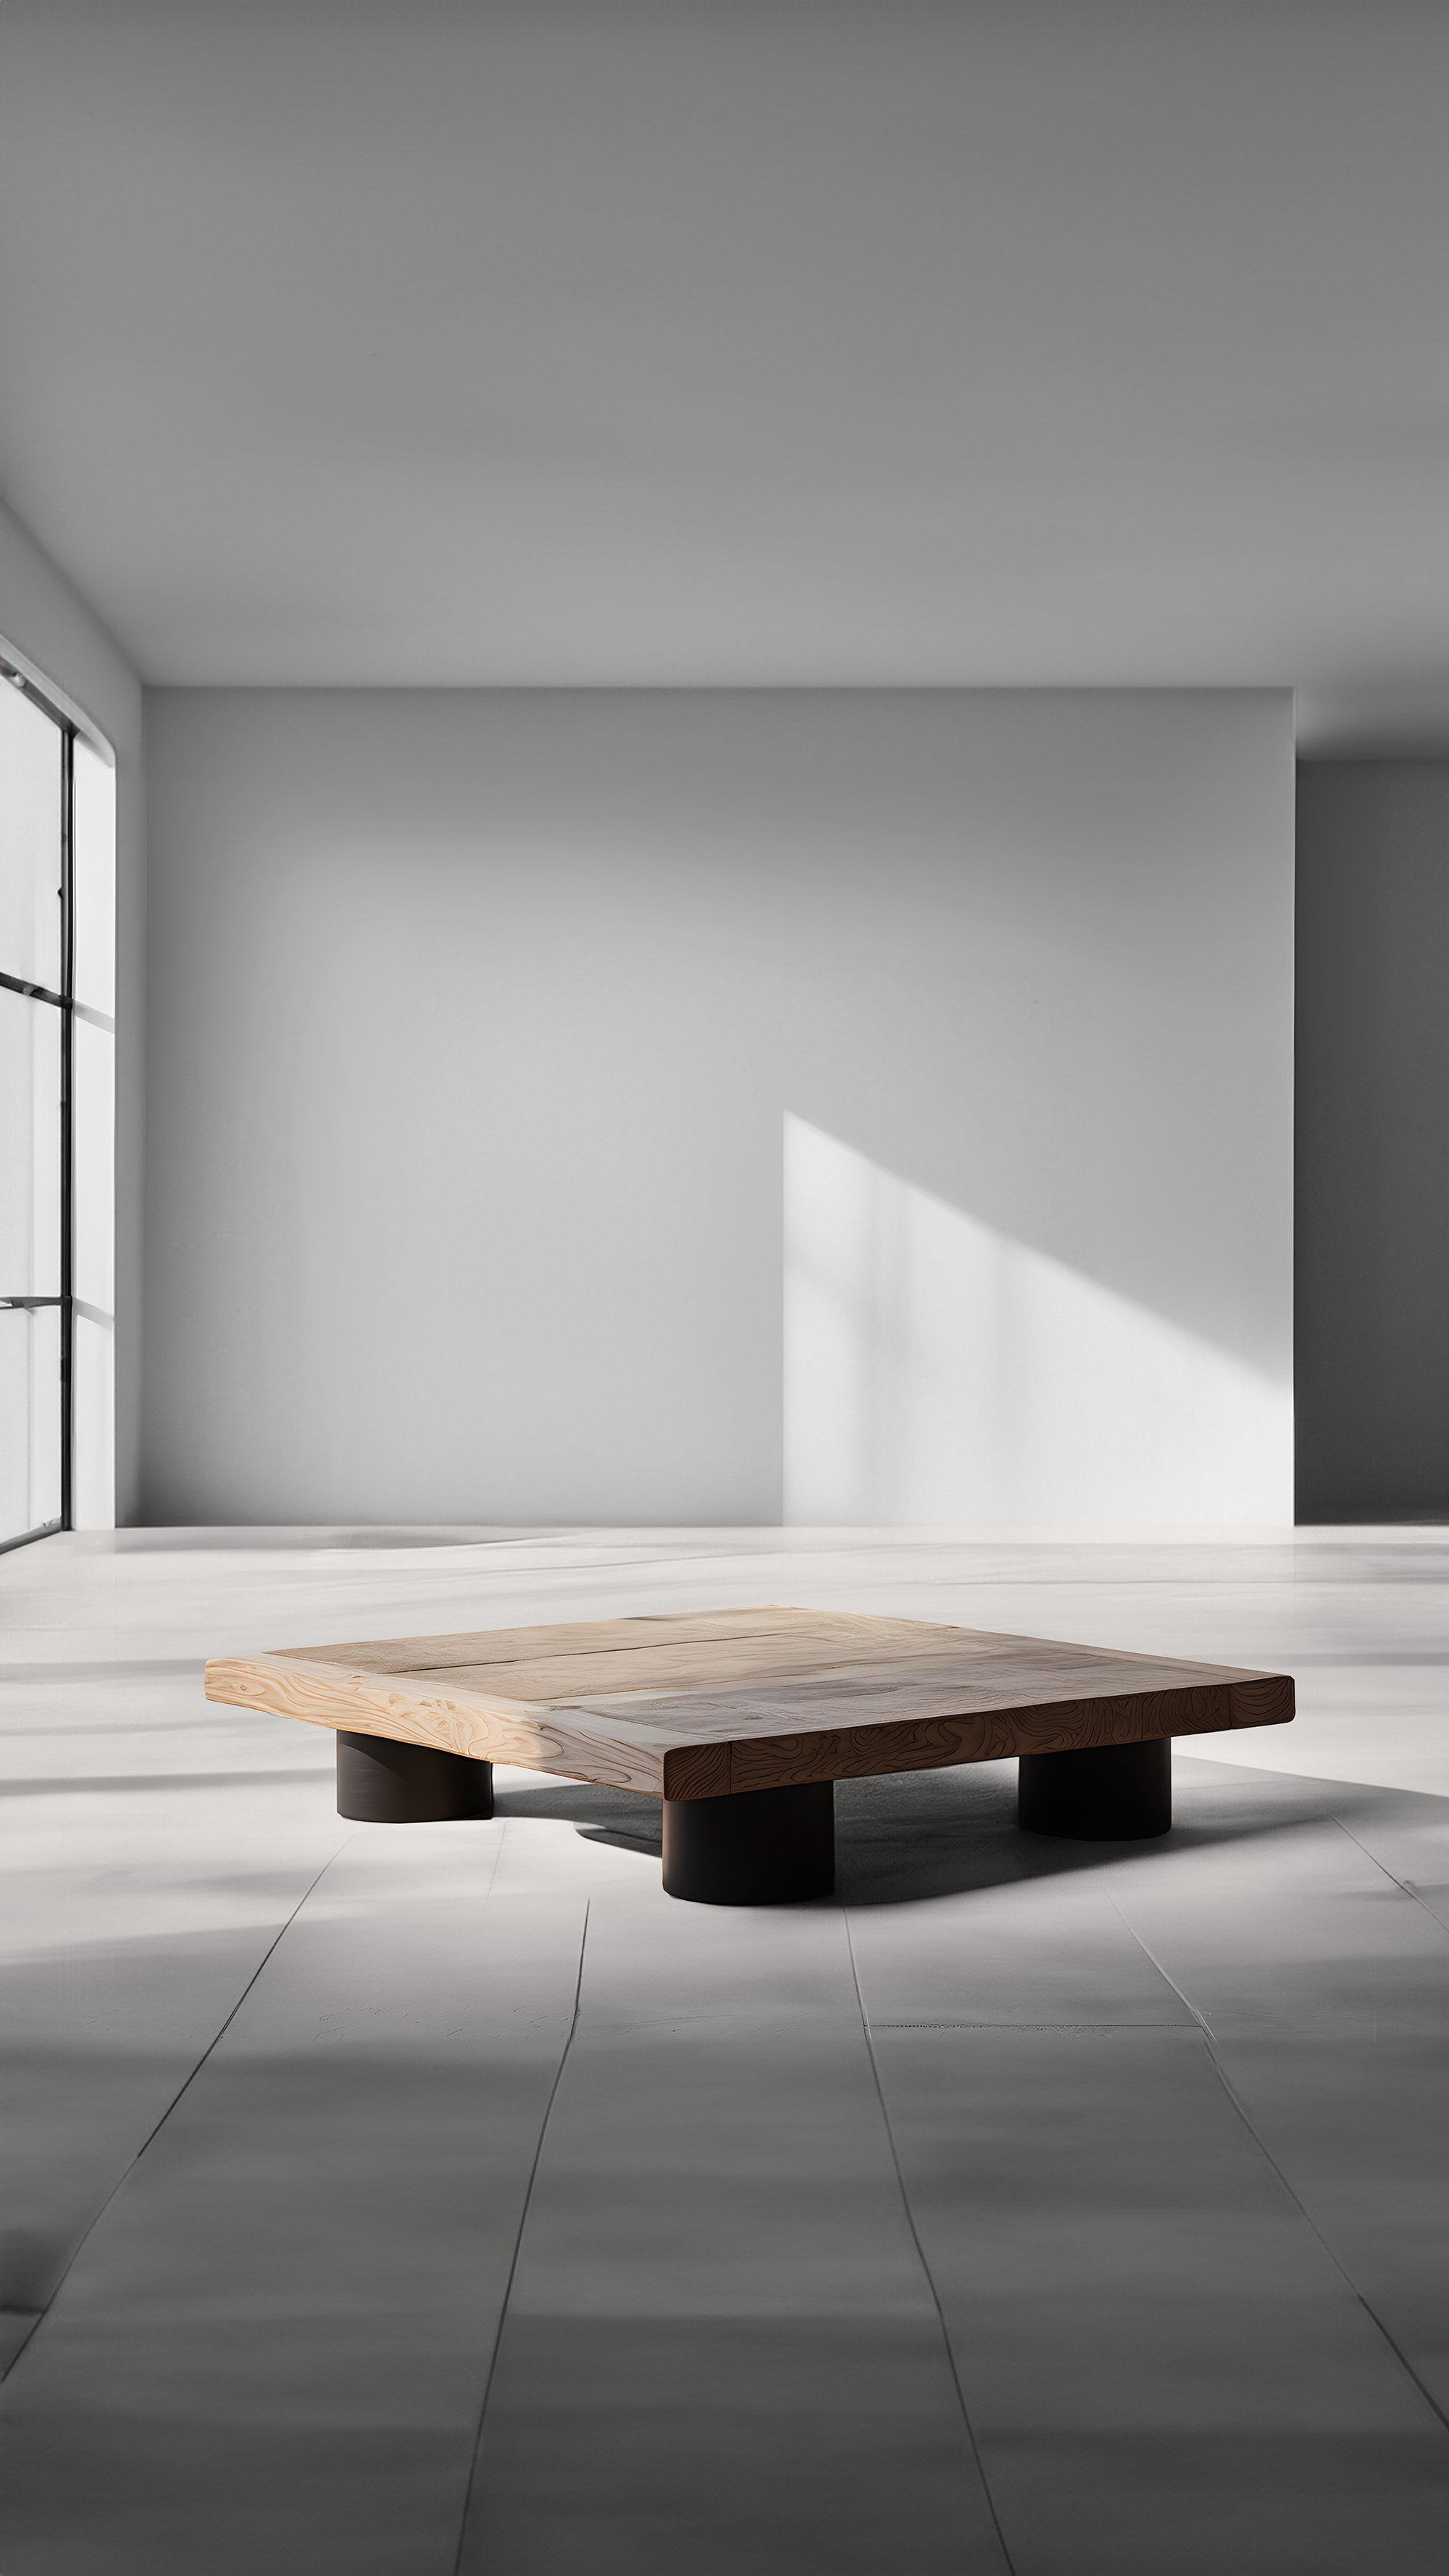 Bold Square Coffee Table in Black Tint - Architectural Fundamenta 29 by NONO — 4.jpg